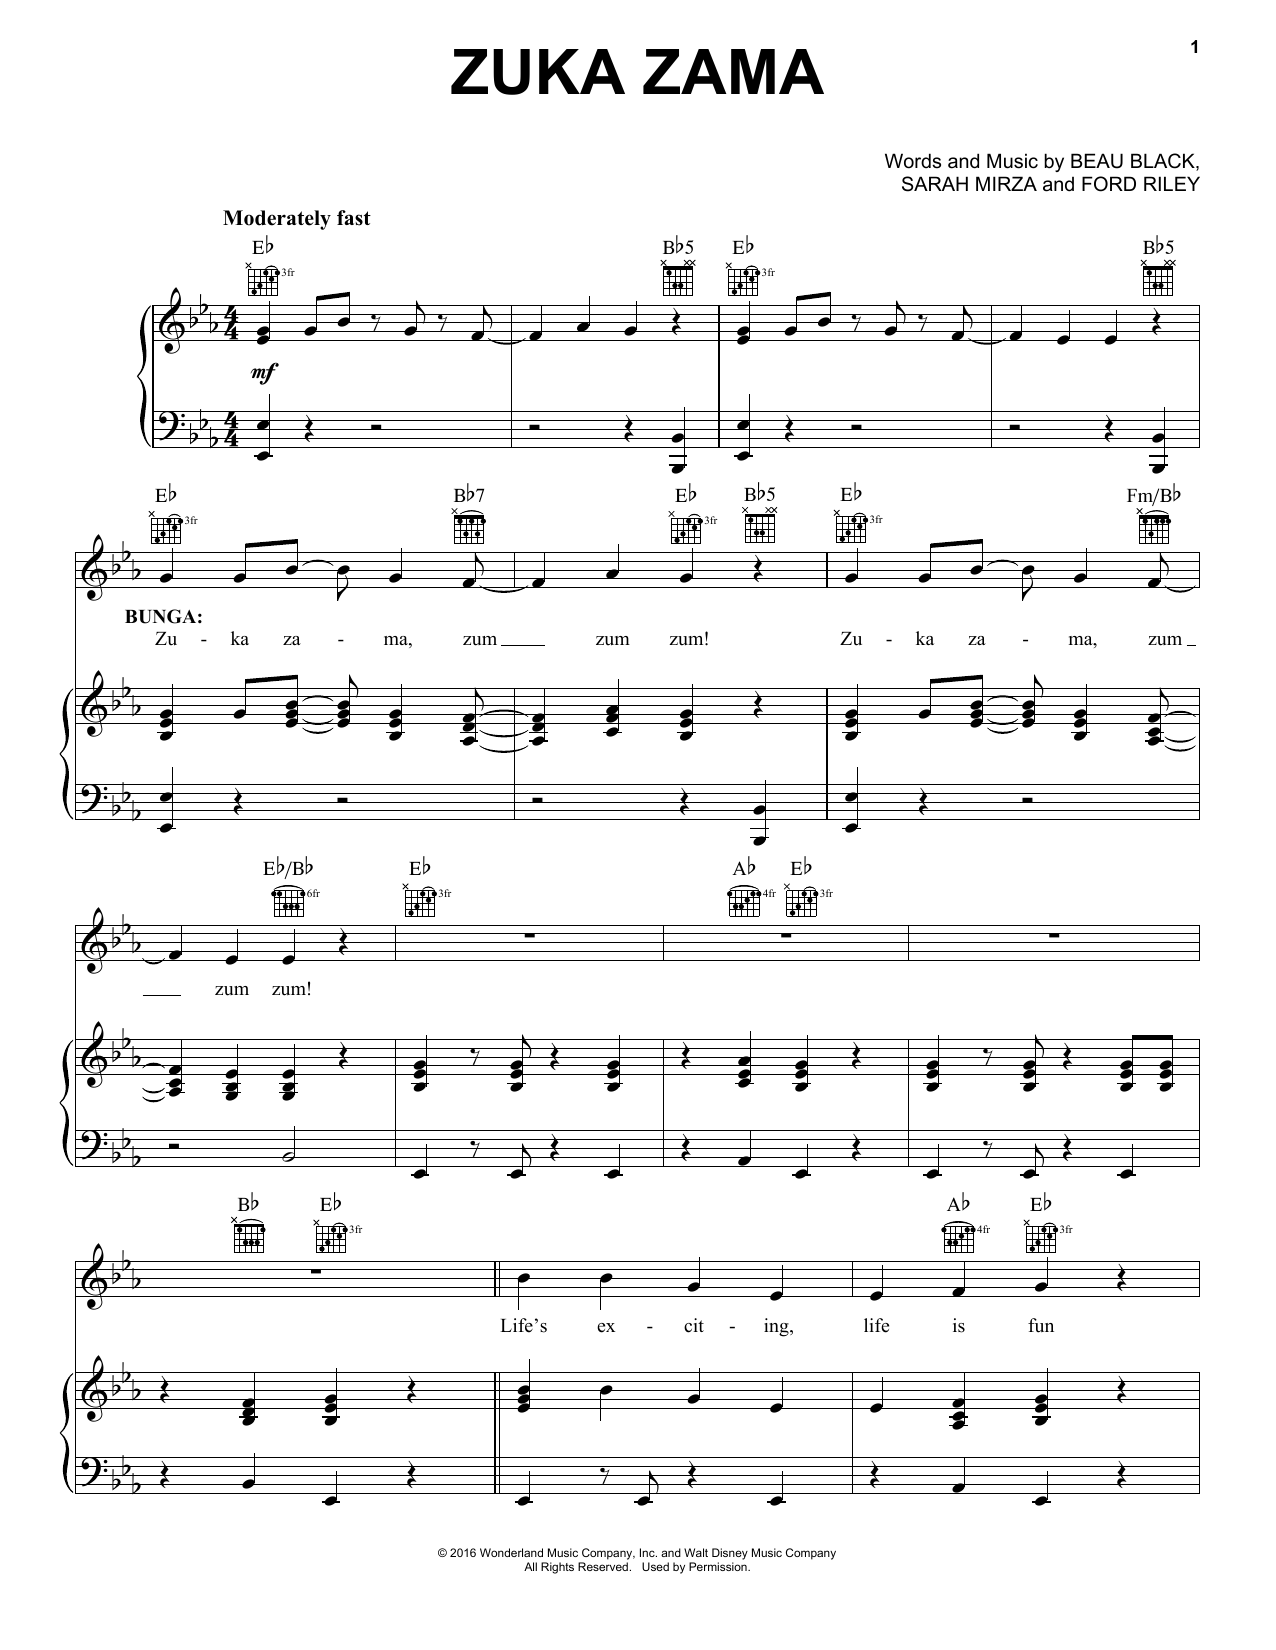 Beau Black Zuka Zama Sheet Music Notes & Chords for Piano, Vocal & Guitar (Right-Hand Melody) - Download or Print PDF